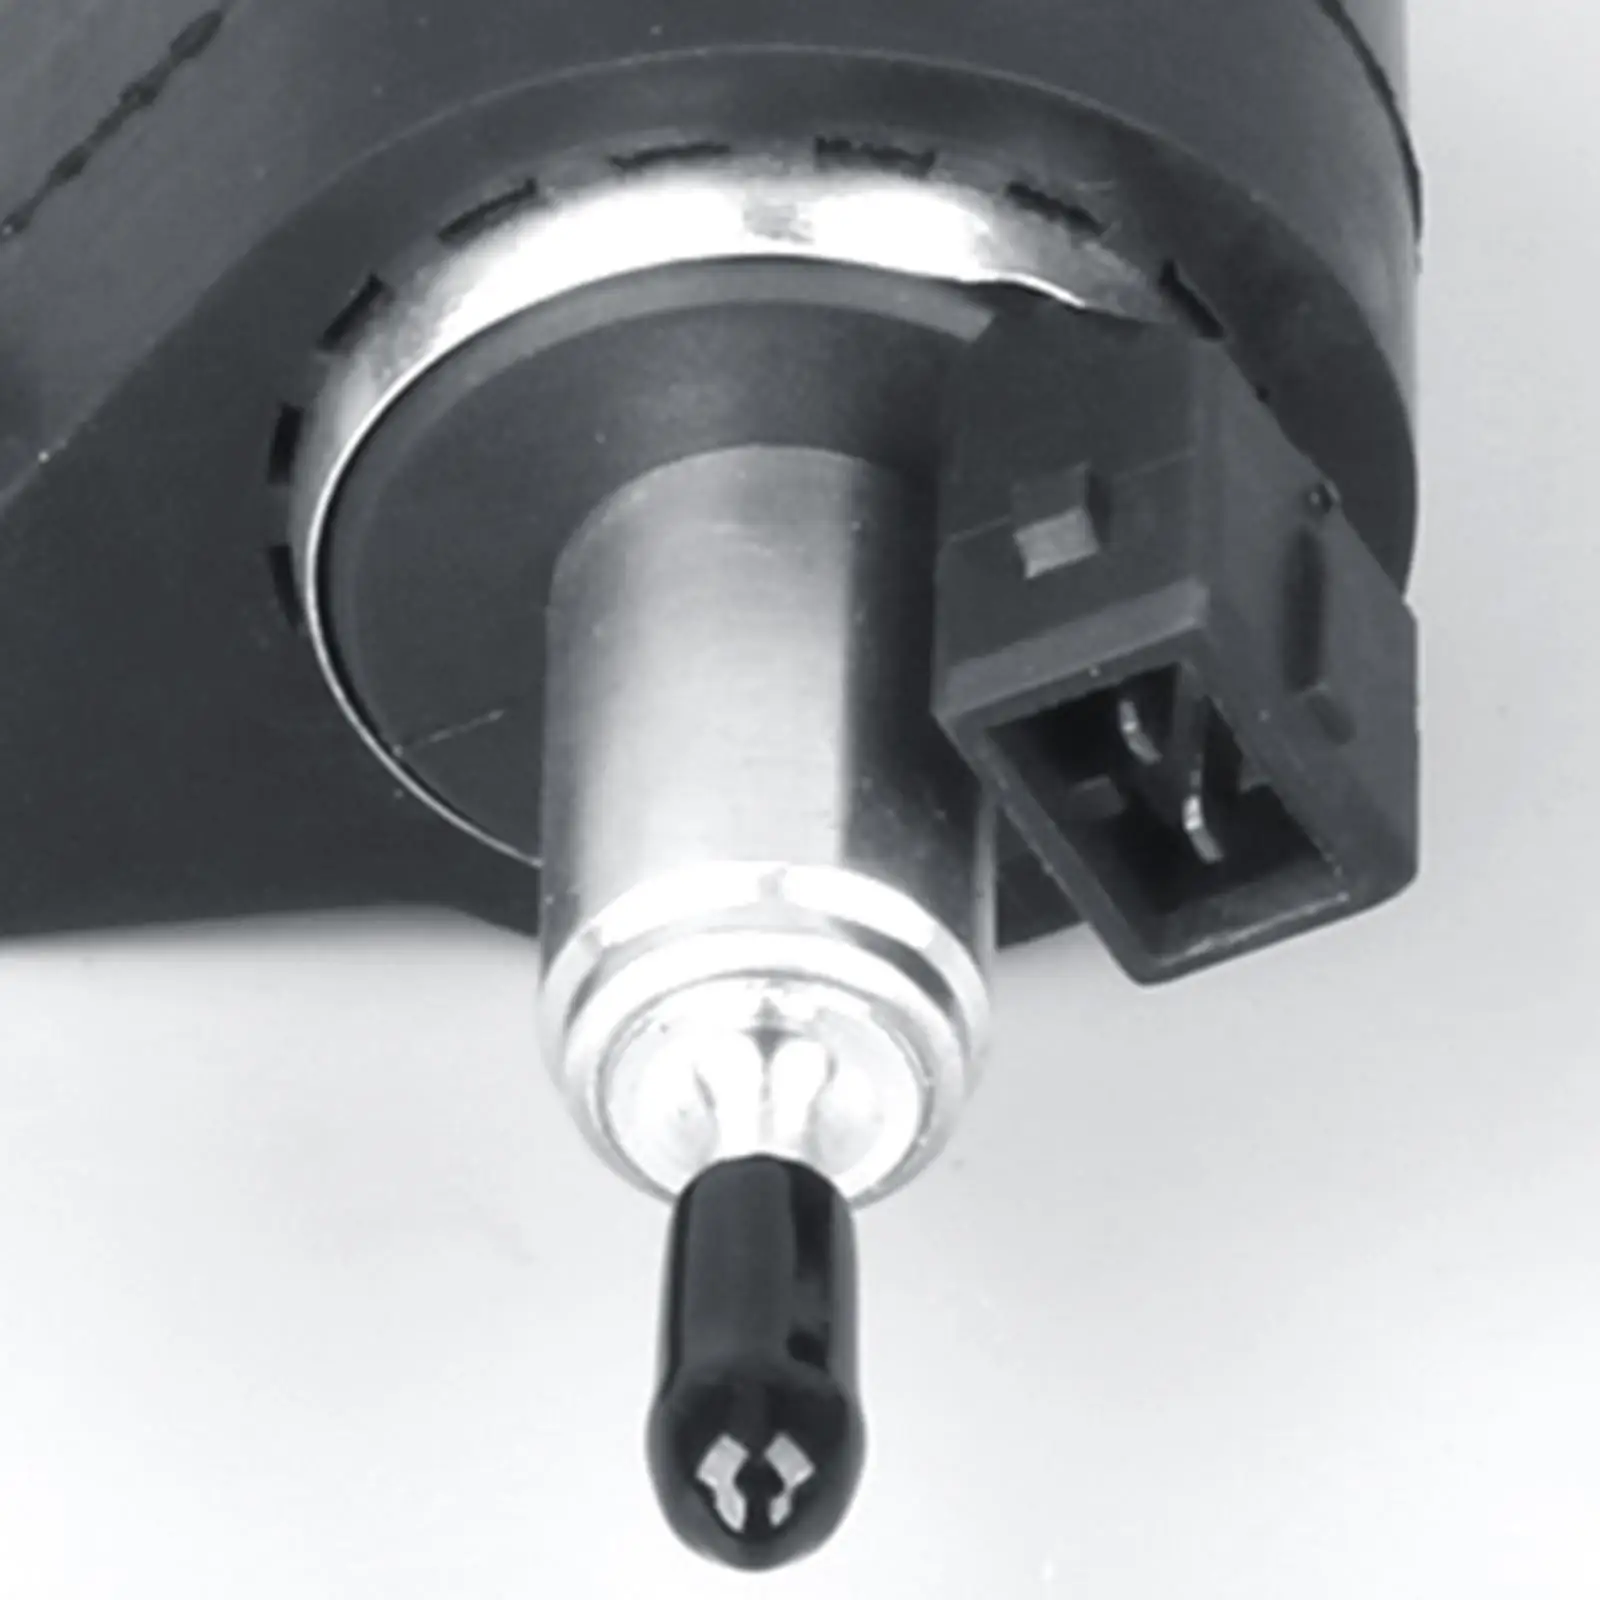 Fuel Pump Extractor Motor Spare Parts for Webasto12V 5kW Parking Heater